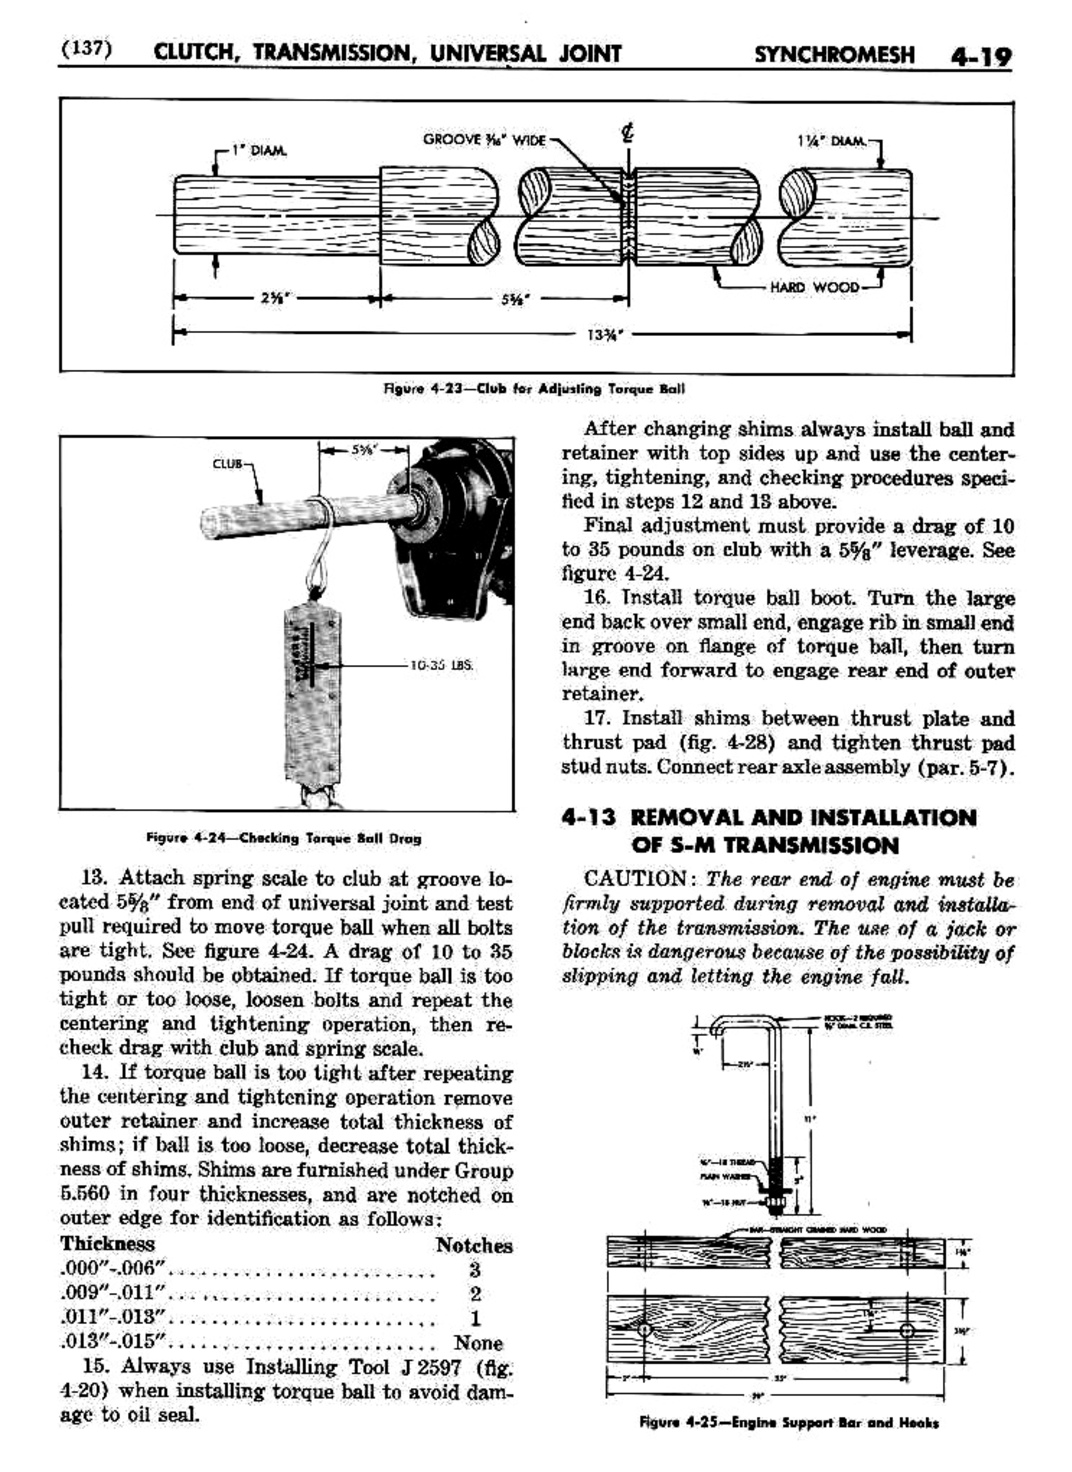 n_05 1951 Buick Shop Manual - Transmission-019-019.jpg